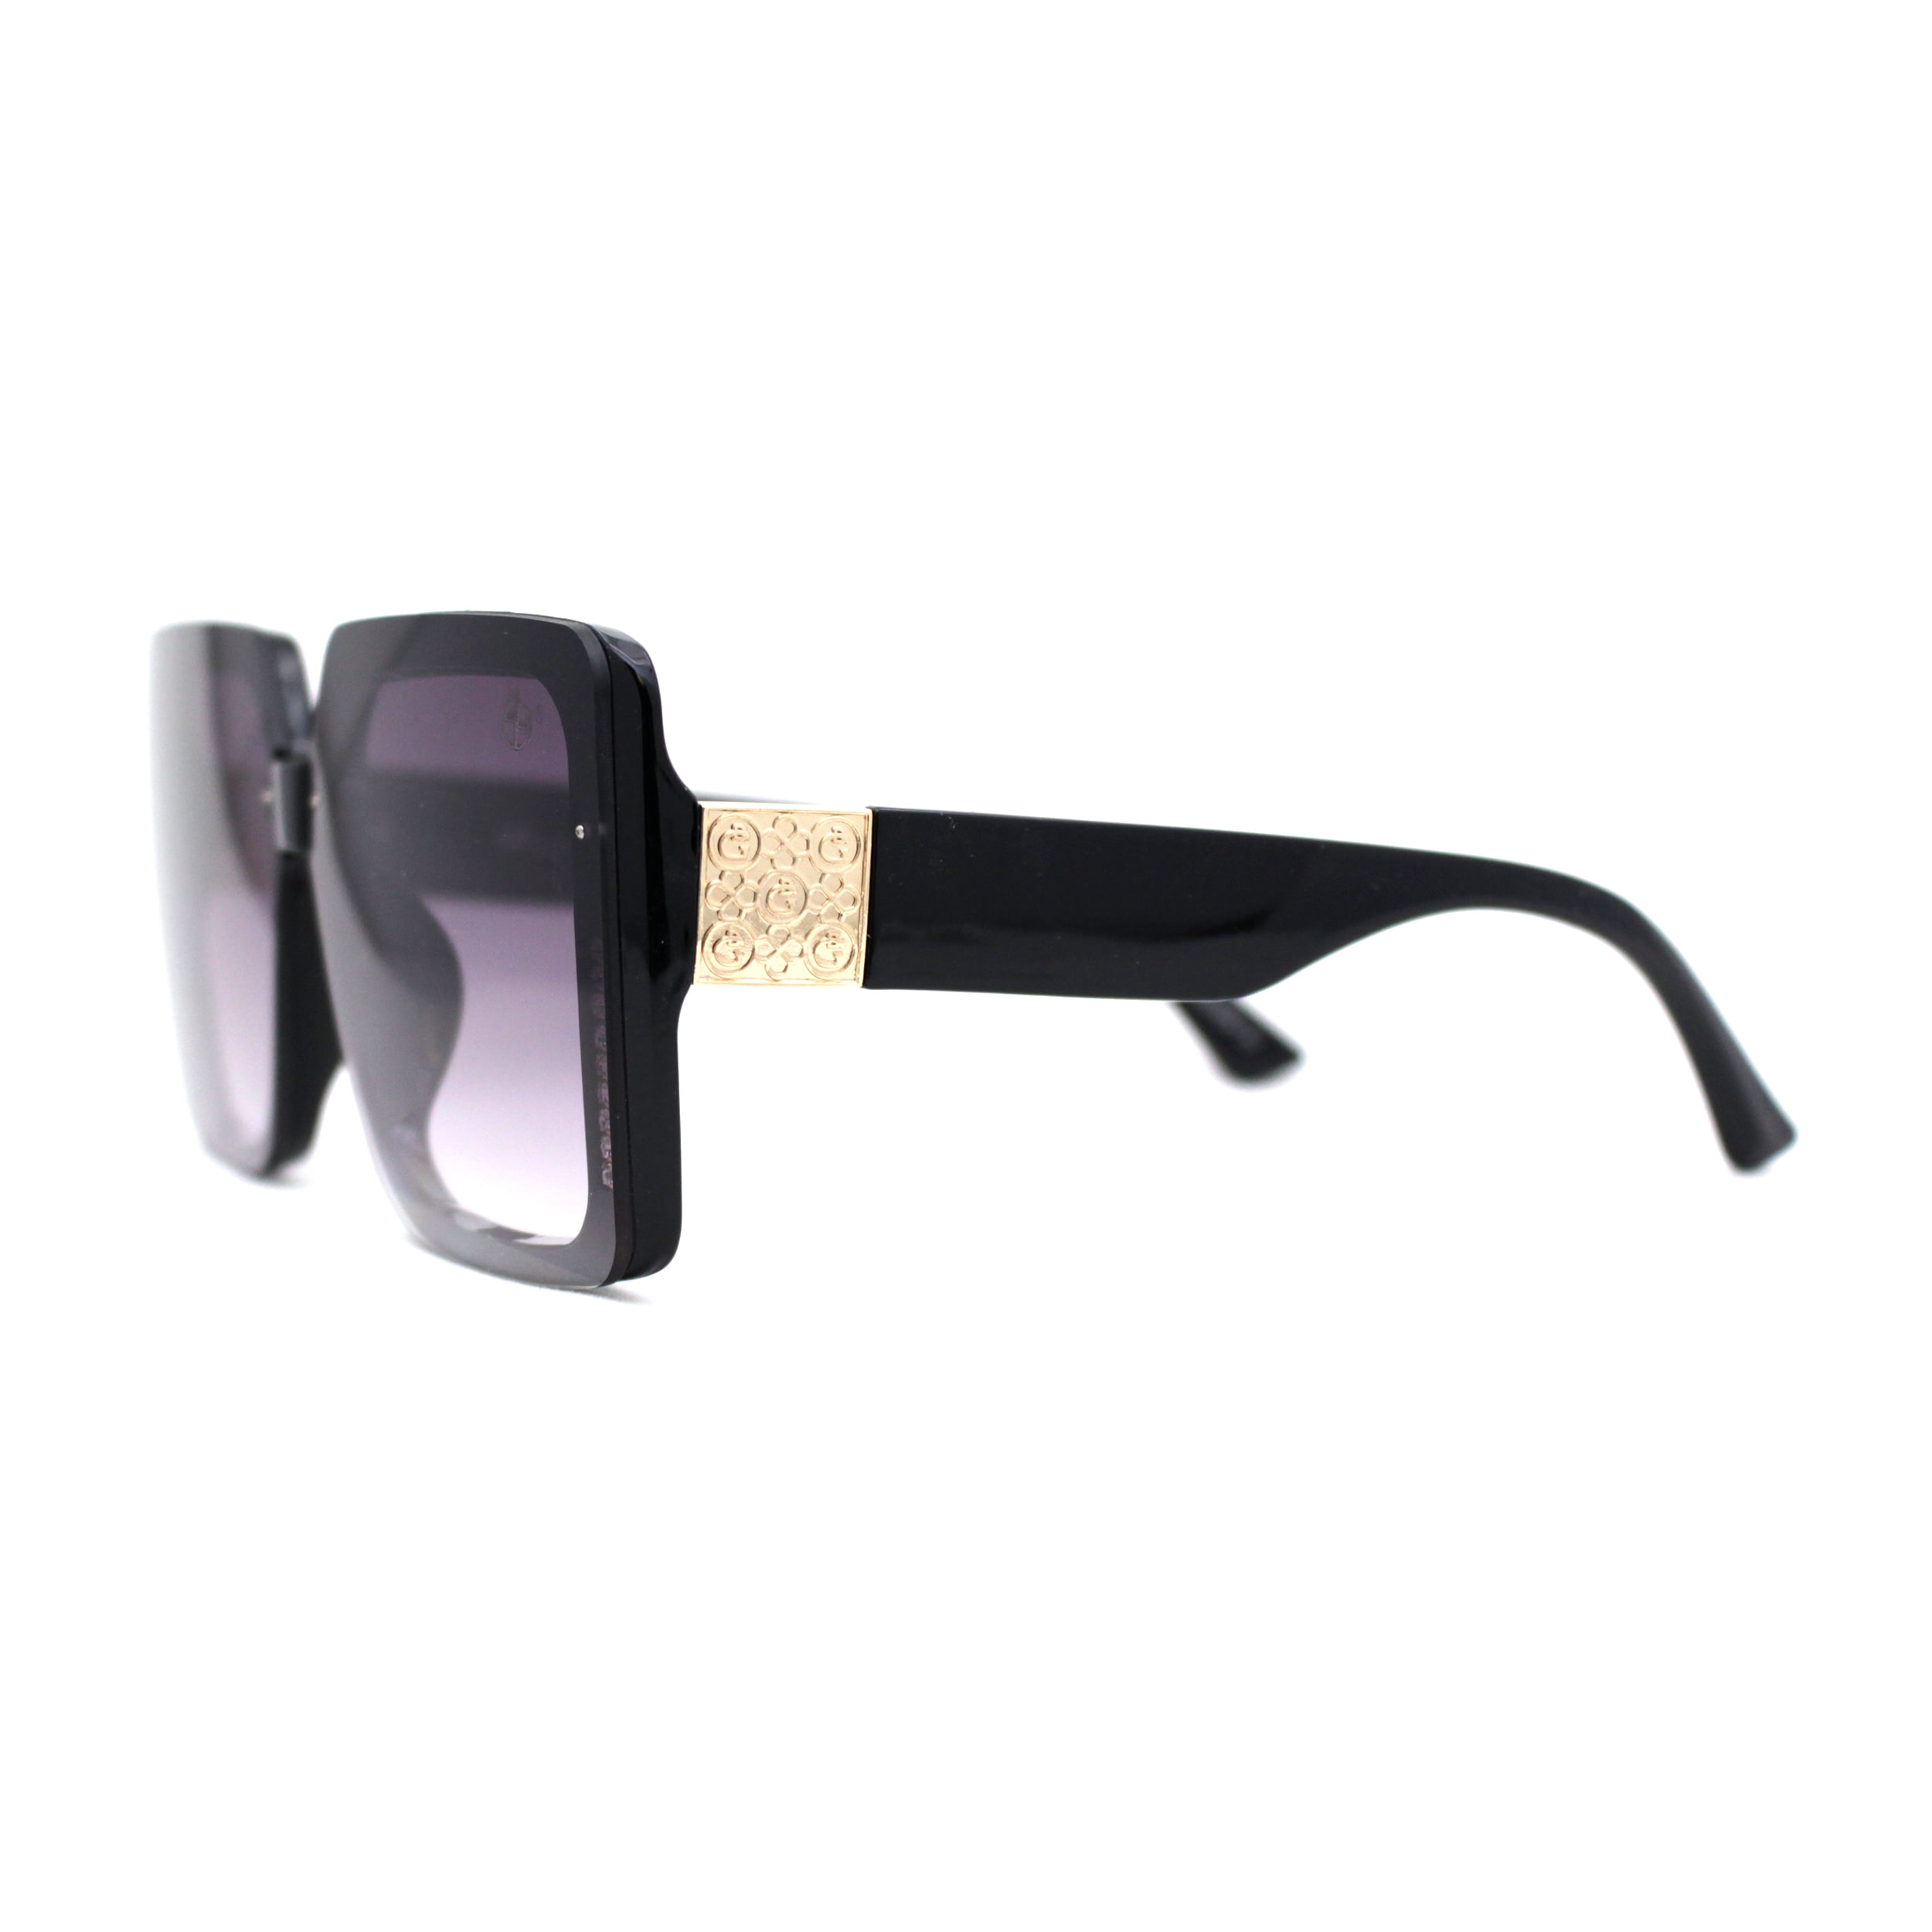 Butterfly Sunglasses - Black & Gold - Acetate & Metal - Default